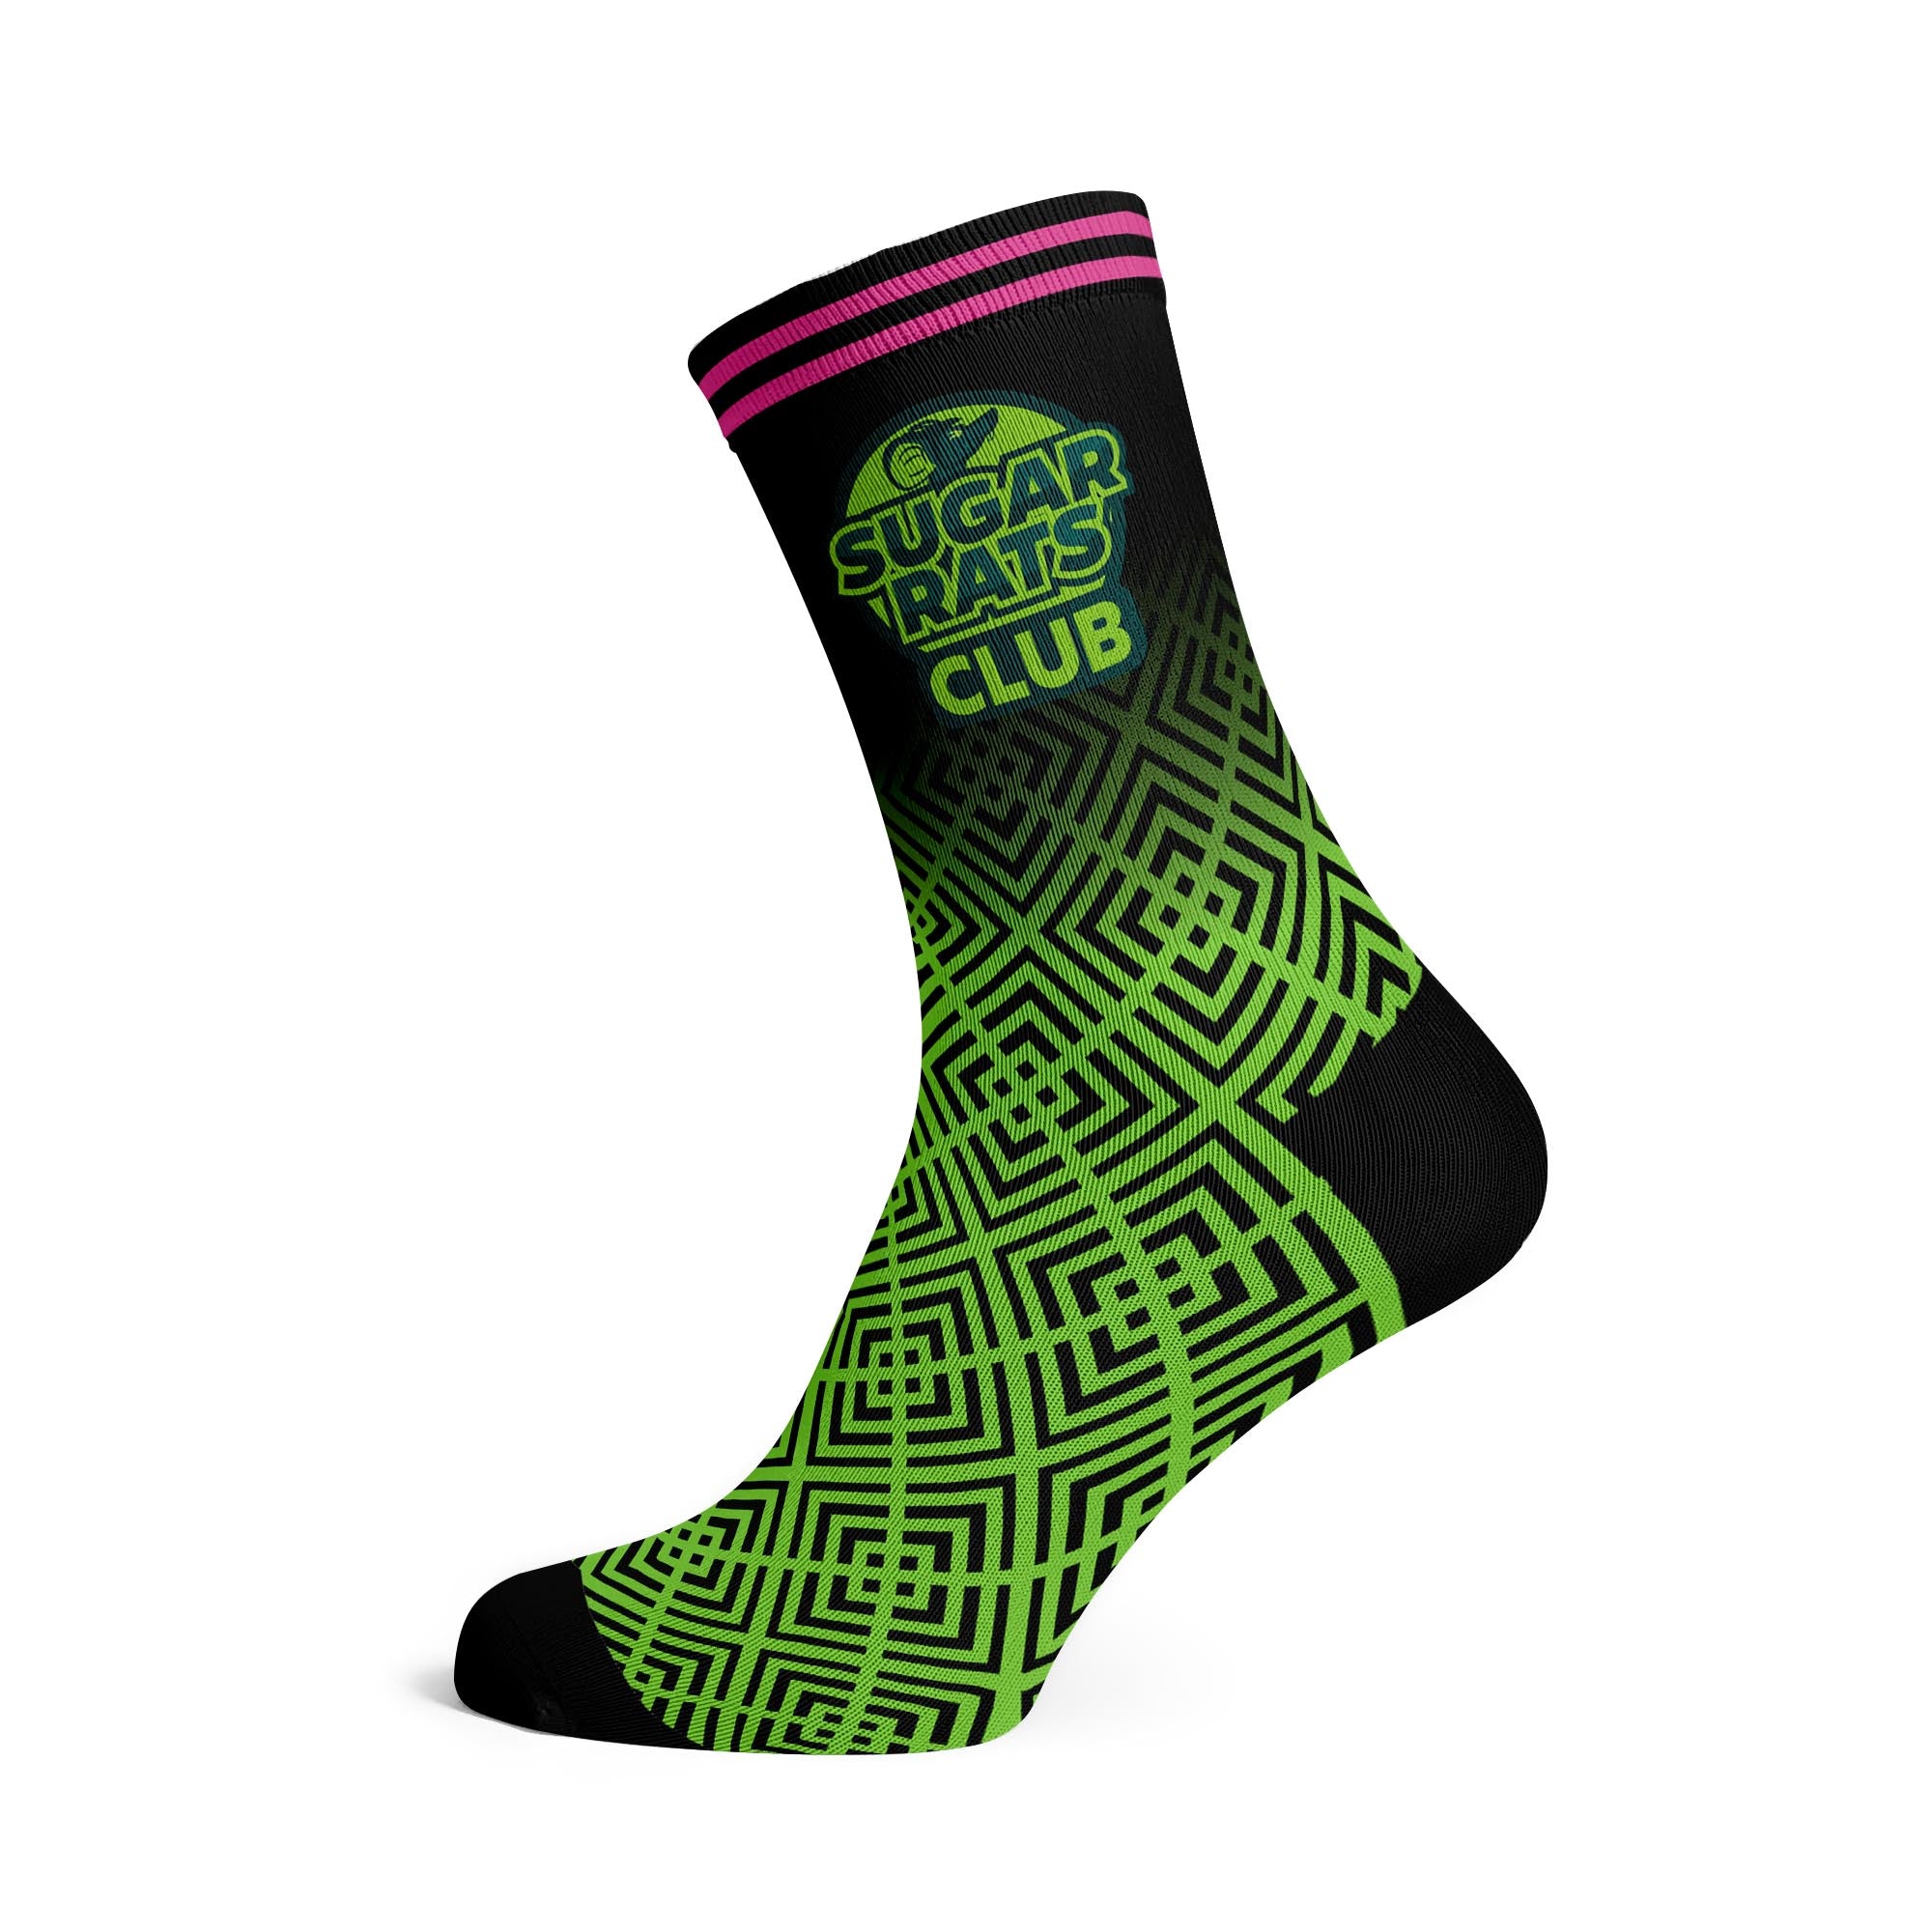 Custom Branded Corporate Socks - Made in South Africa